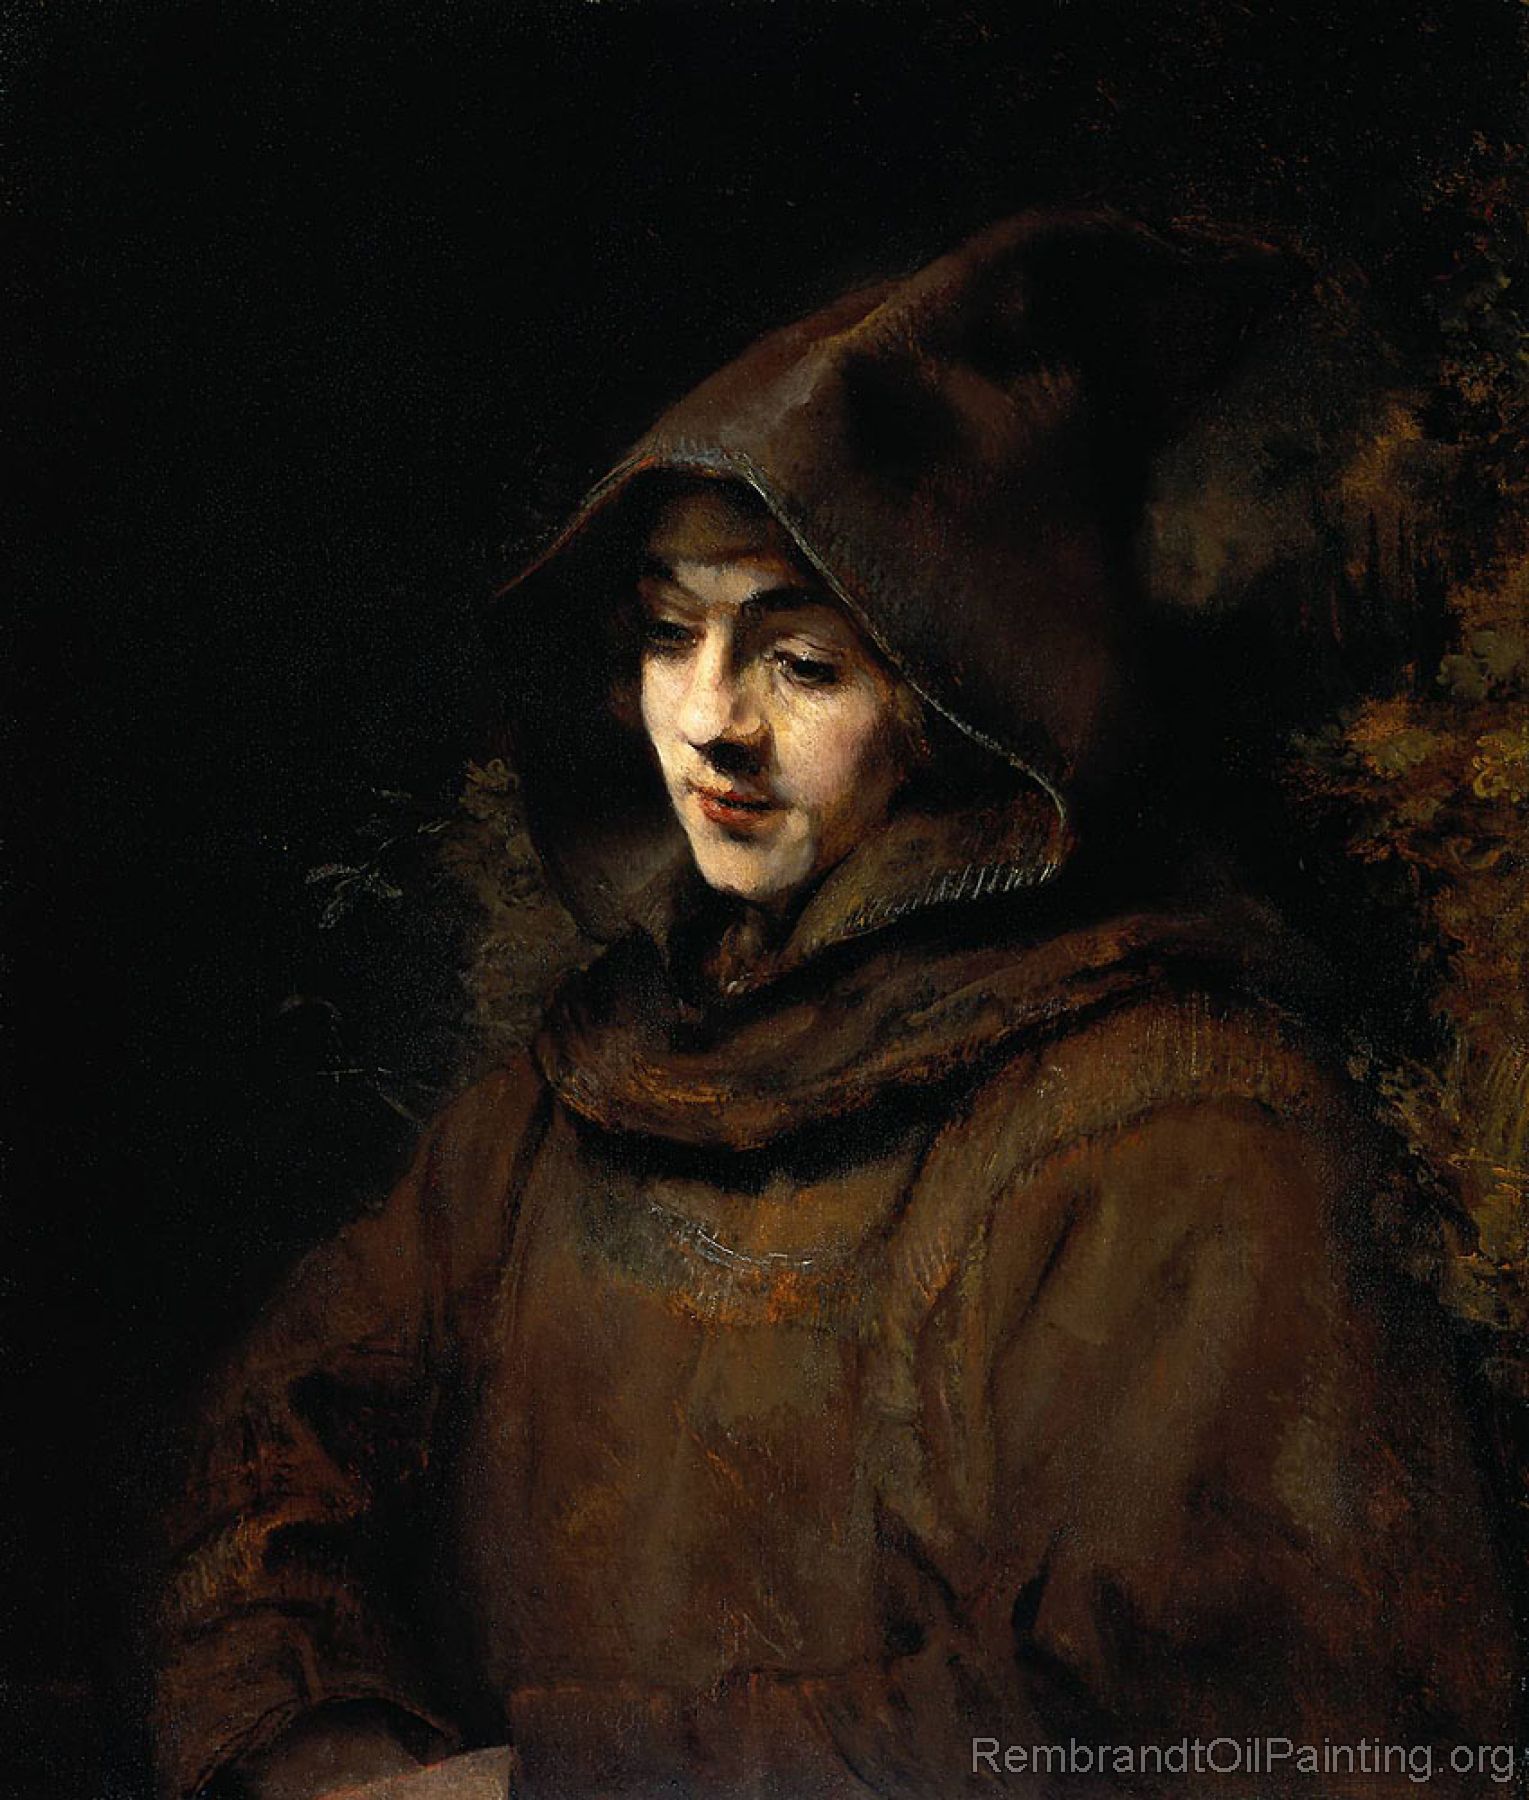 Rembrandt's son Titus, as a monk